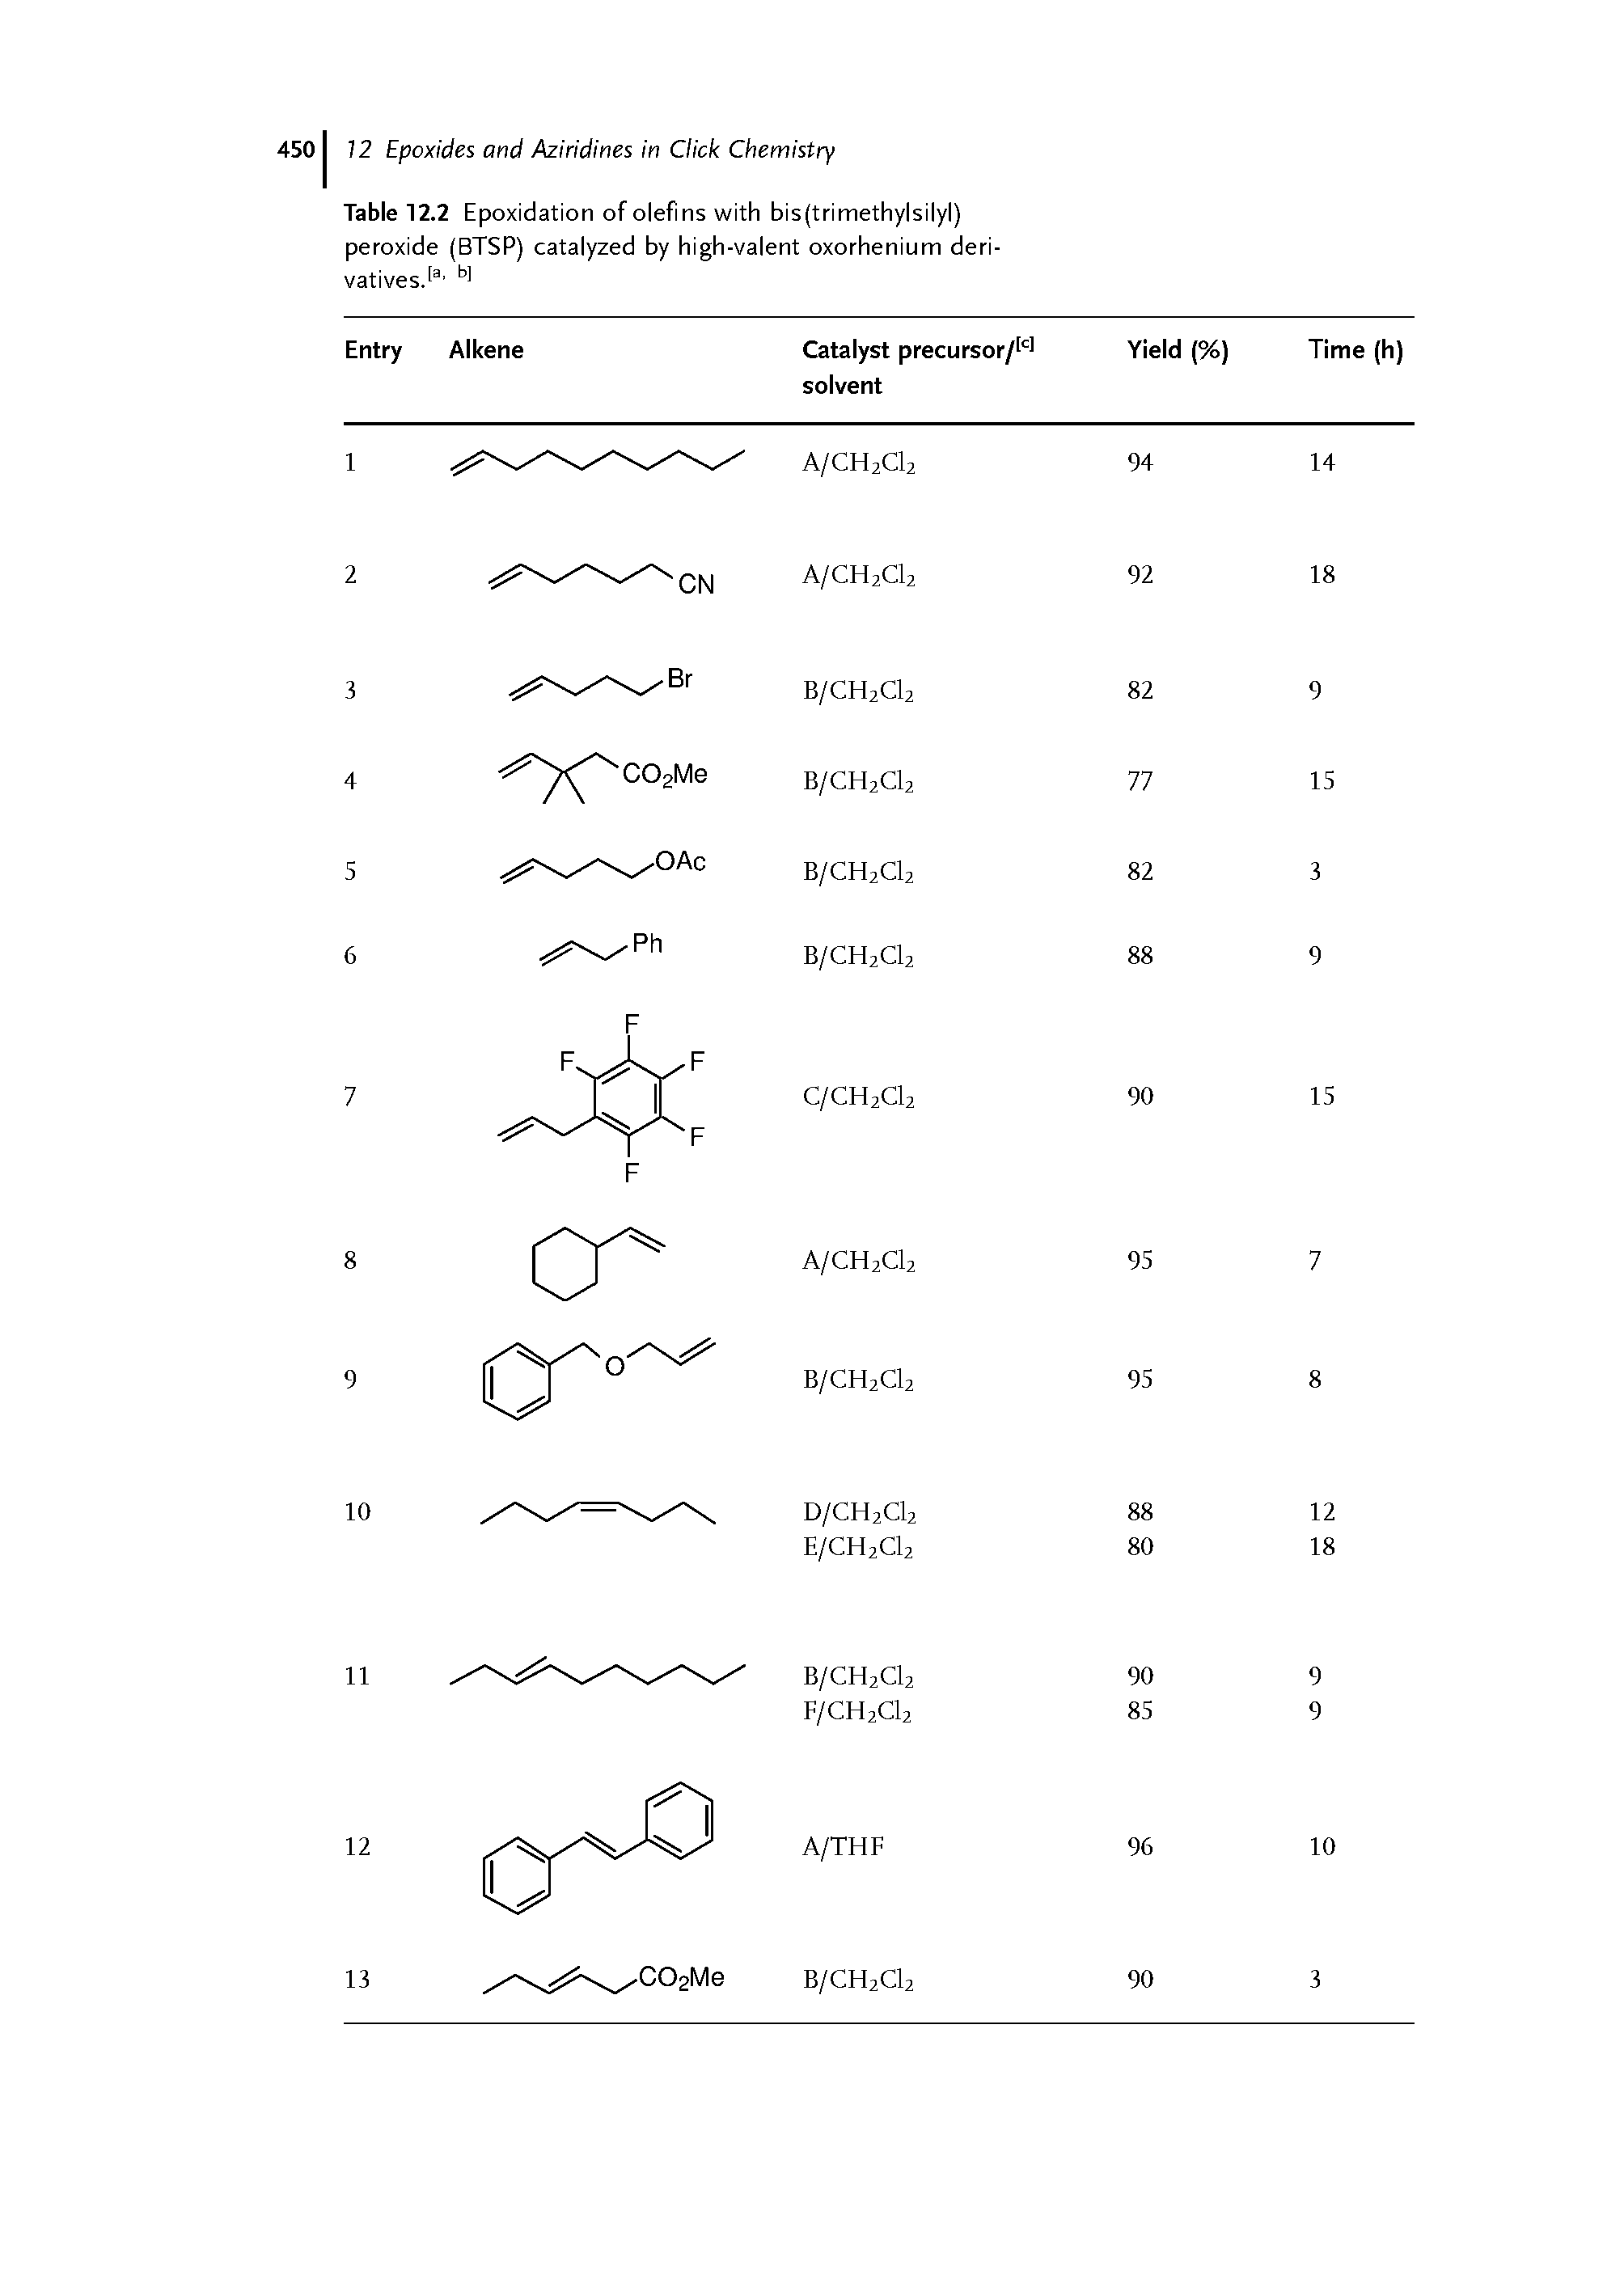 Table 12.2 Epoxidation of olefins with bis(trimethylsilyl) peroxide (BTSP) catalyzed by high-valent oxorhenium deri-vatives> bl...